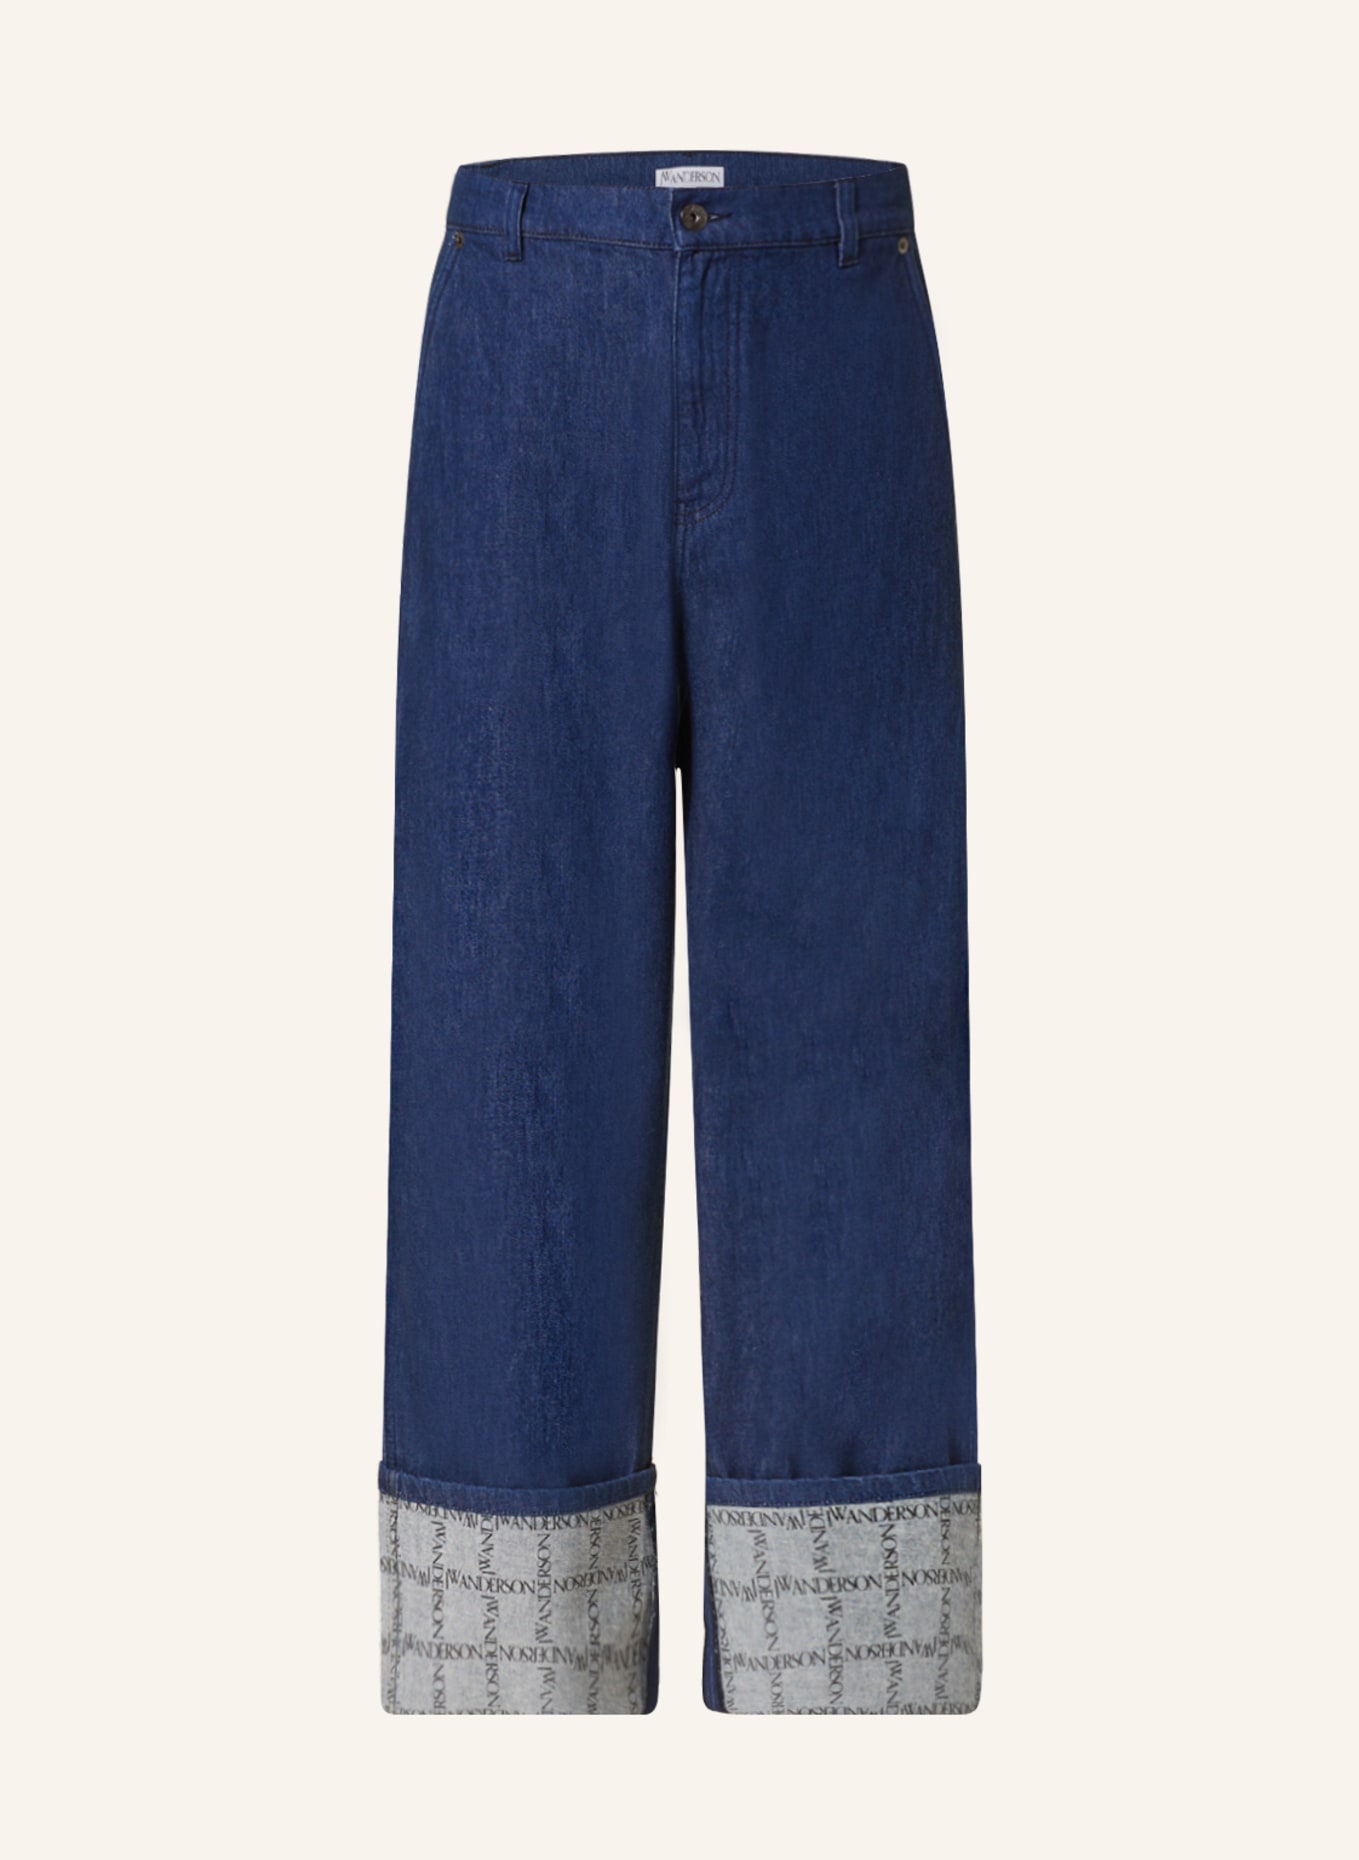 JW ANDERSON Jeans Wide Fit, Farbe: 870 INDIGO (Bild 1)